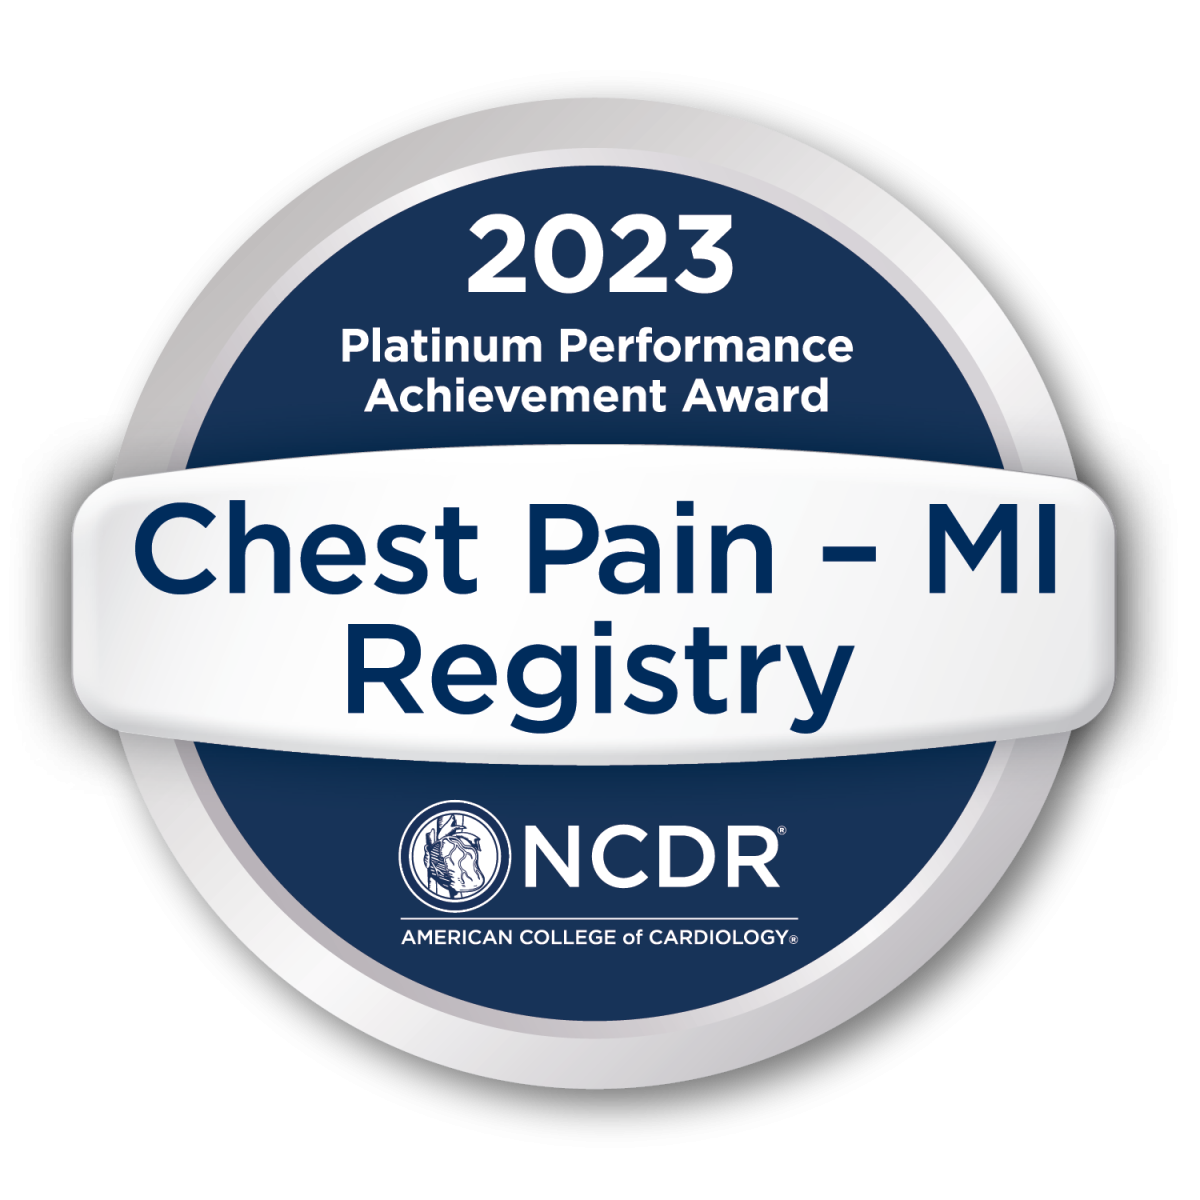 Chest Pain - MI Registry NCDR 2023 Platinum Performance Achievement Award logo